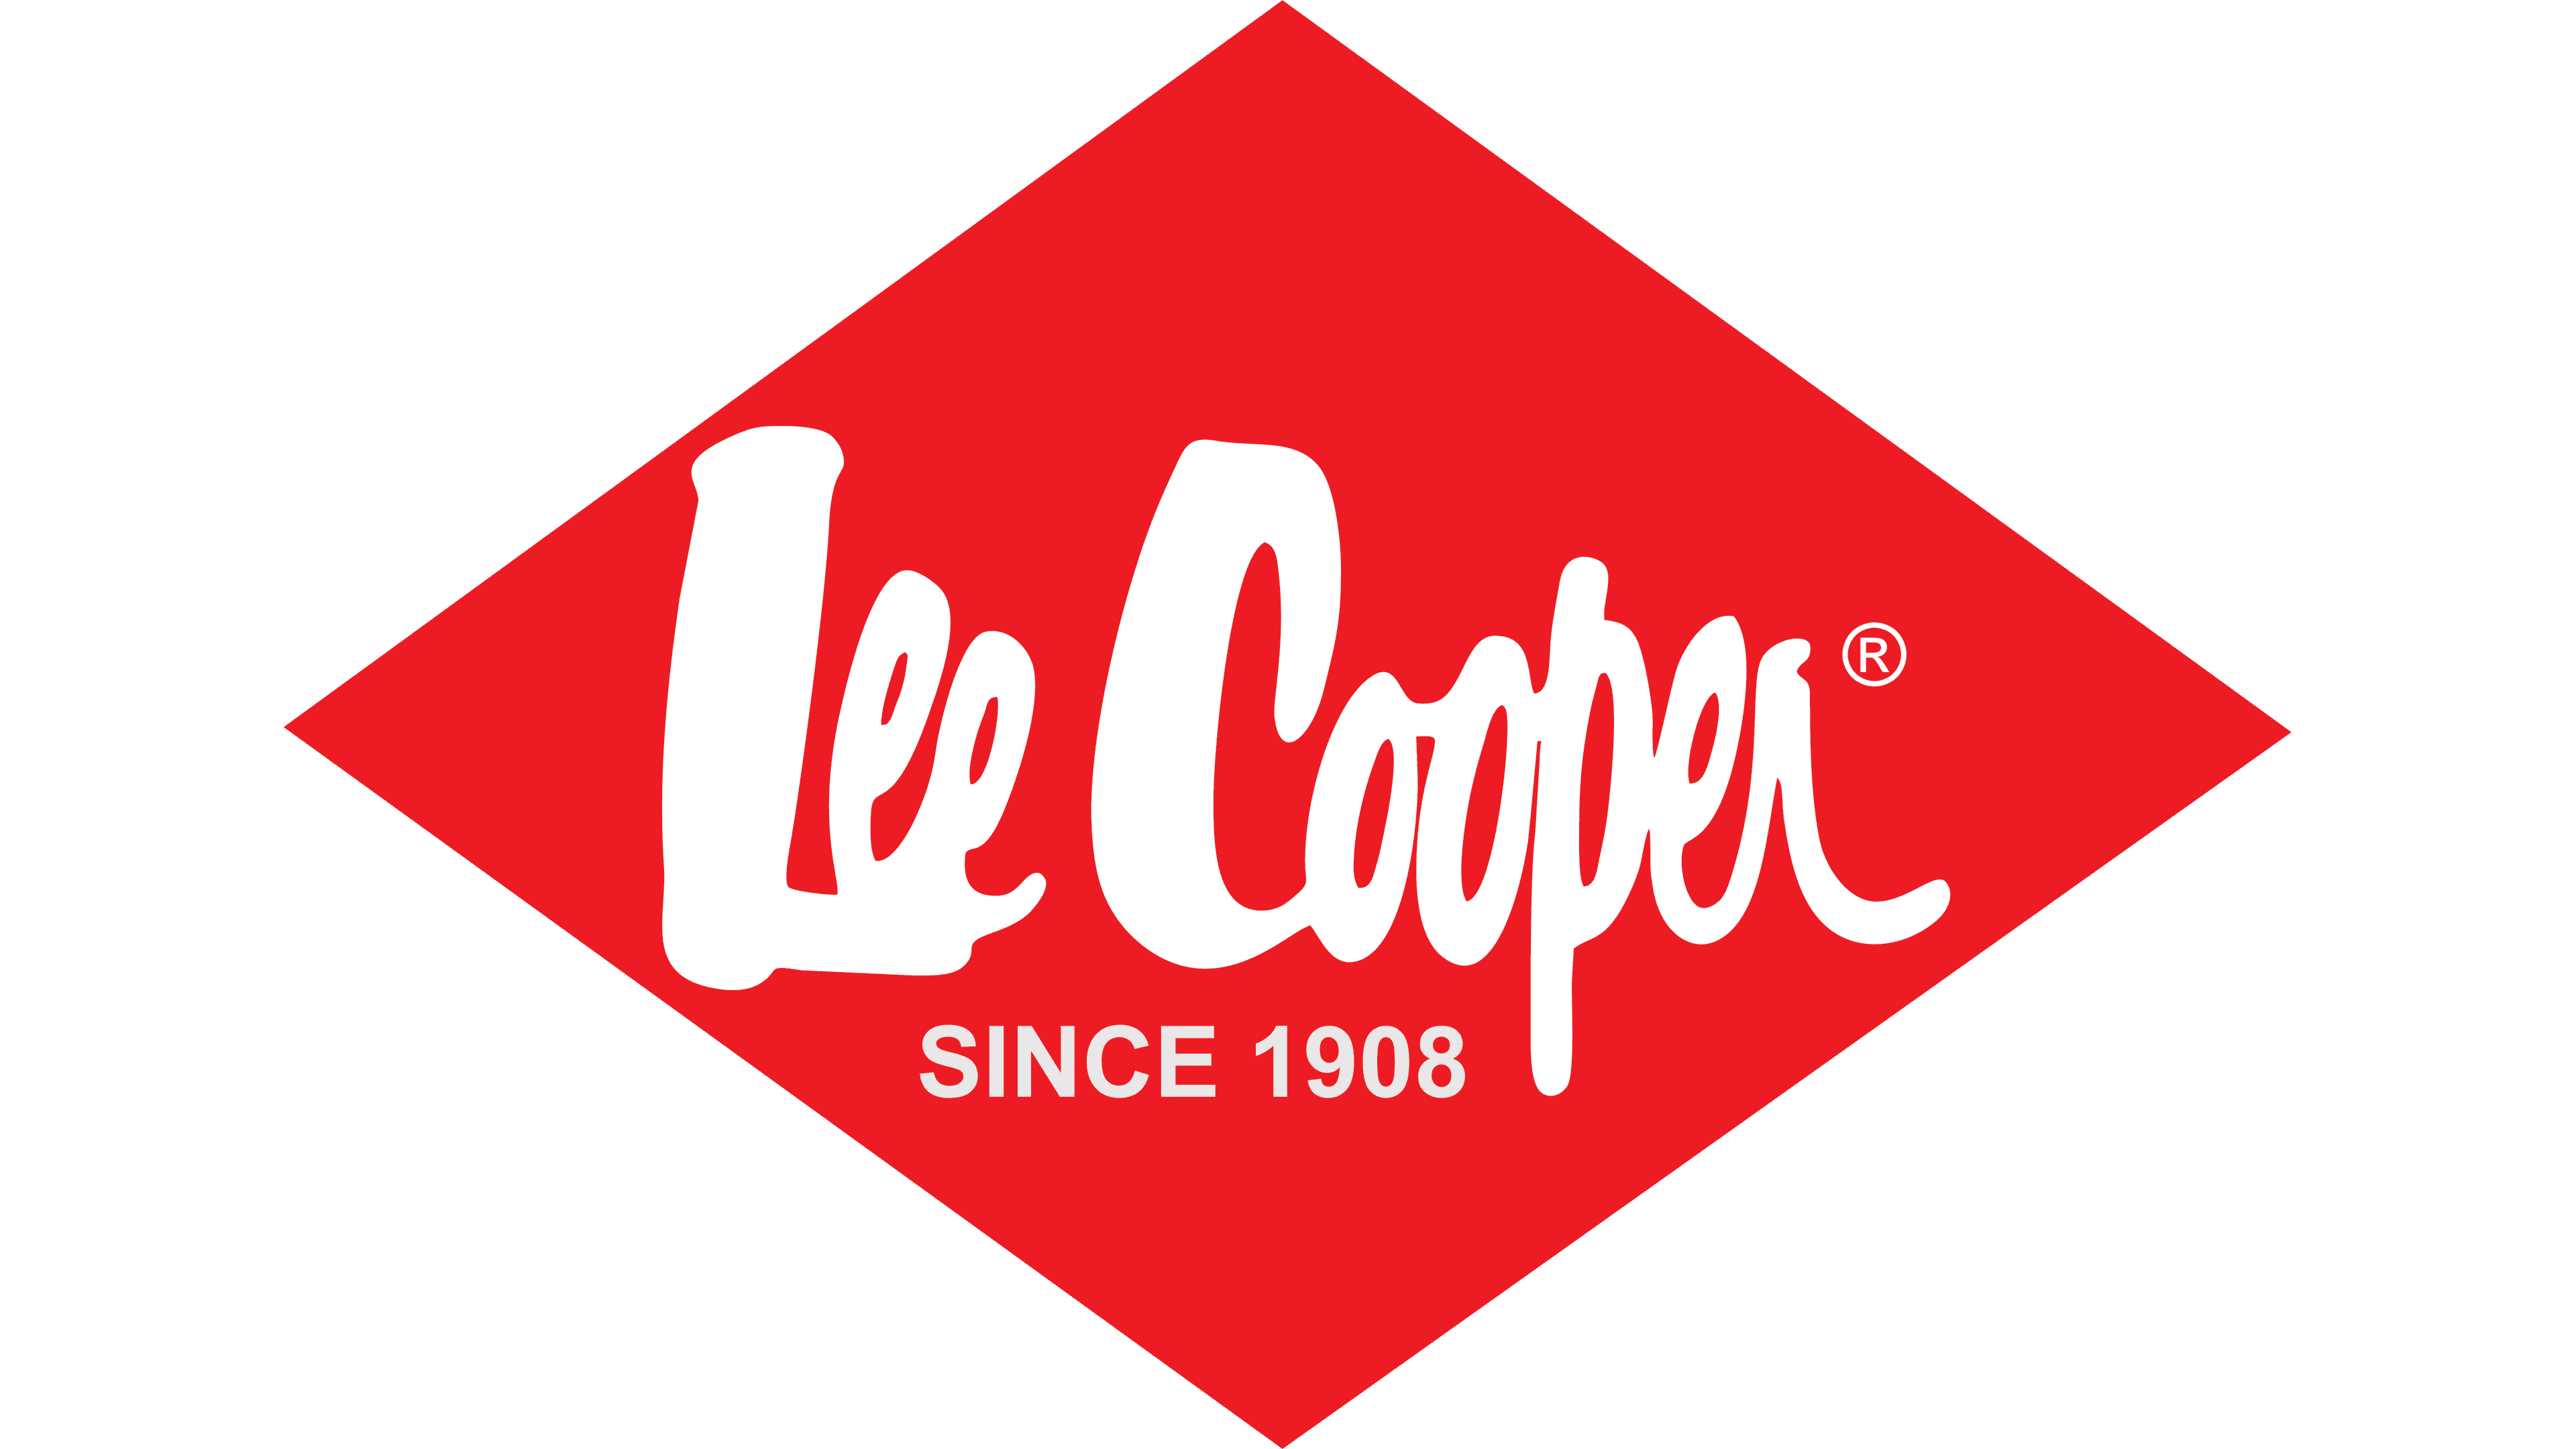 Lee Cooper - لی کوپر